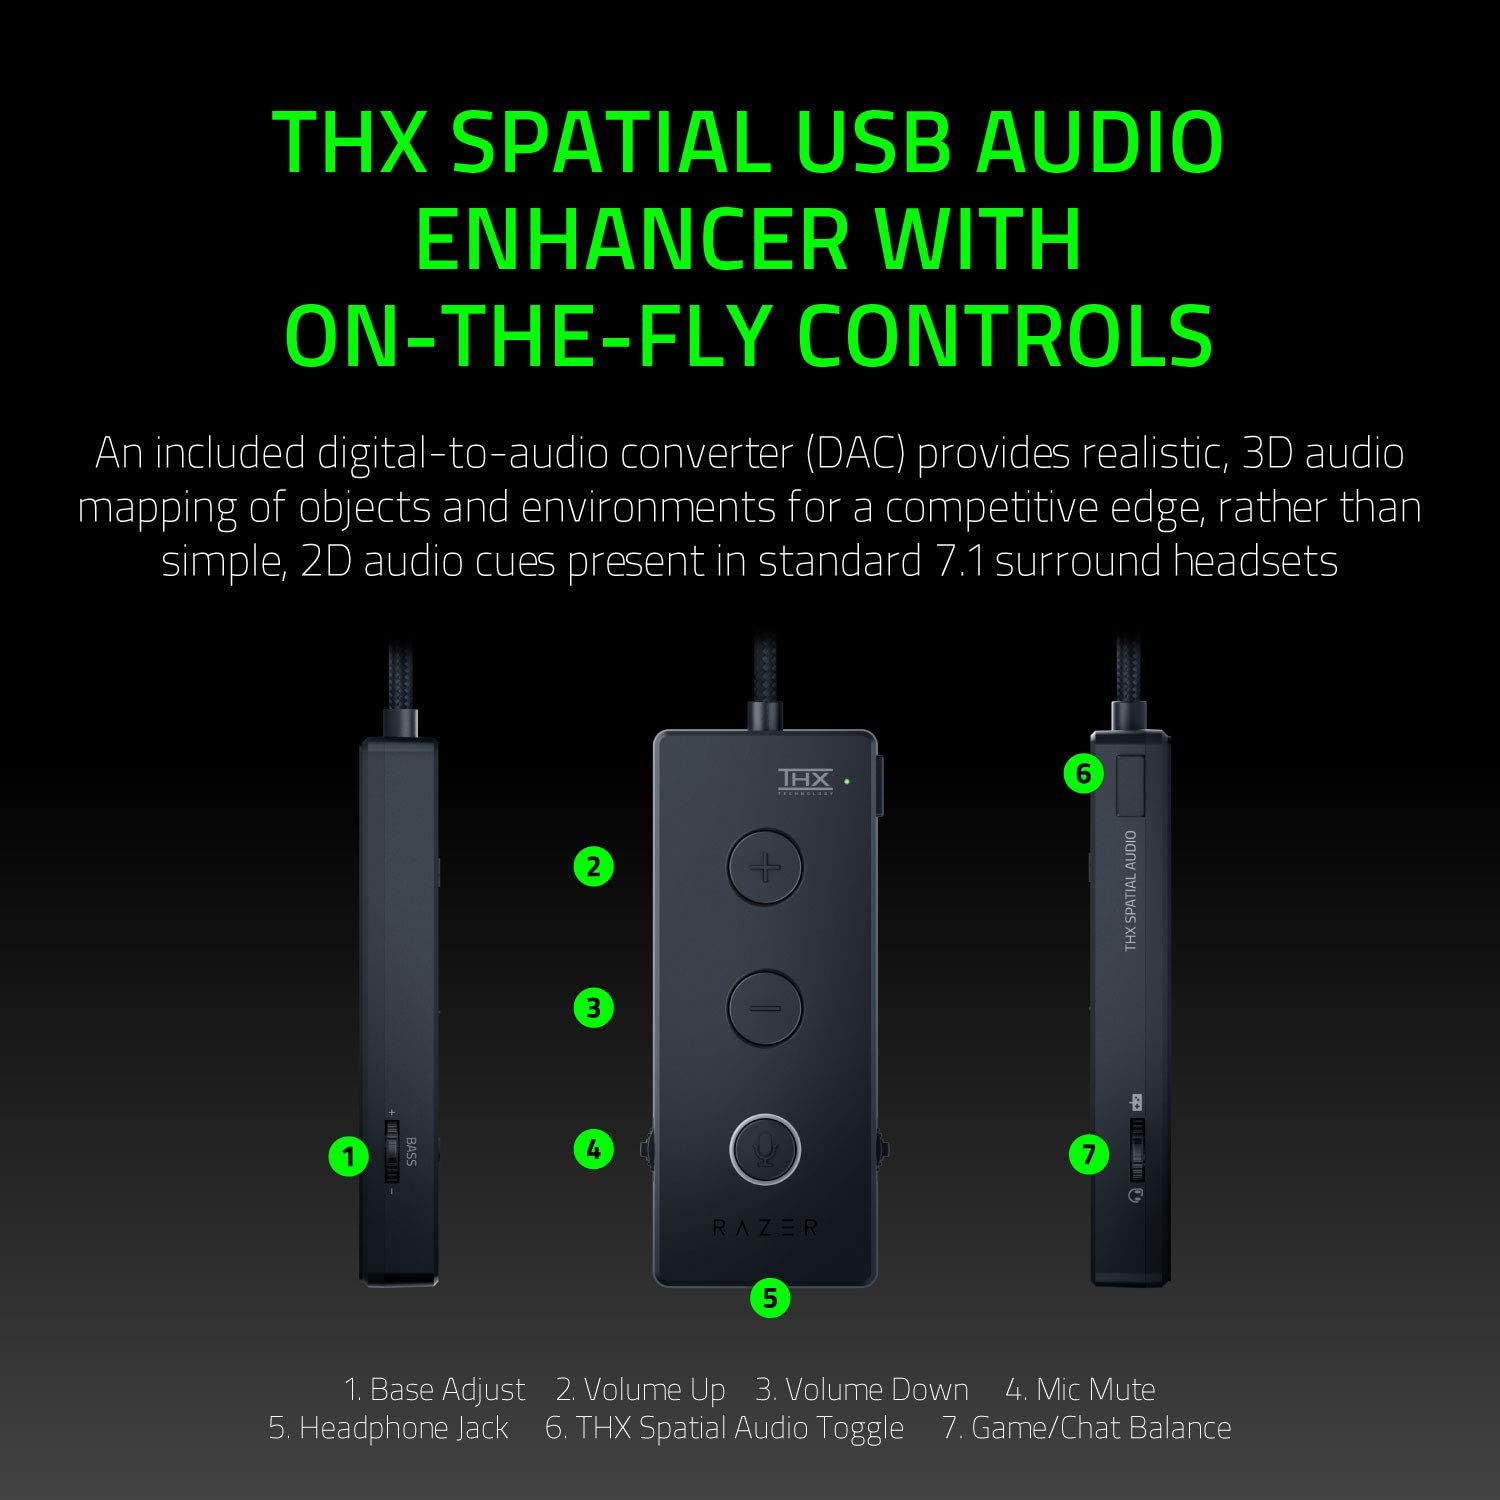 Razer Kraken Tournament Edition THX 7.1 Surround Sound Gaming Headset: Retractable Noise Cancelling Mic - USB DAC - For PC, PS4, PS5, Nintendo Switch, Xbox One, Xbox Series X & S, Mobile – Black